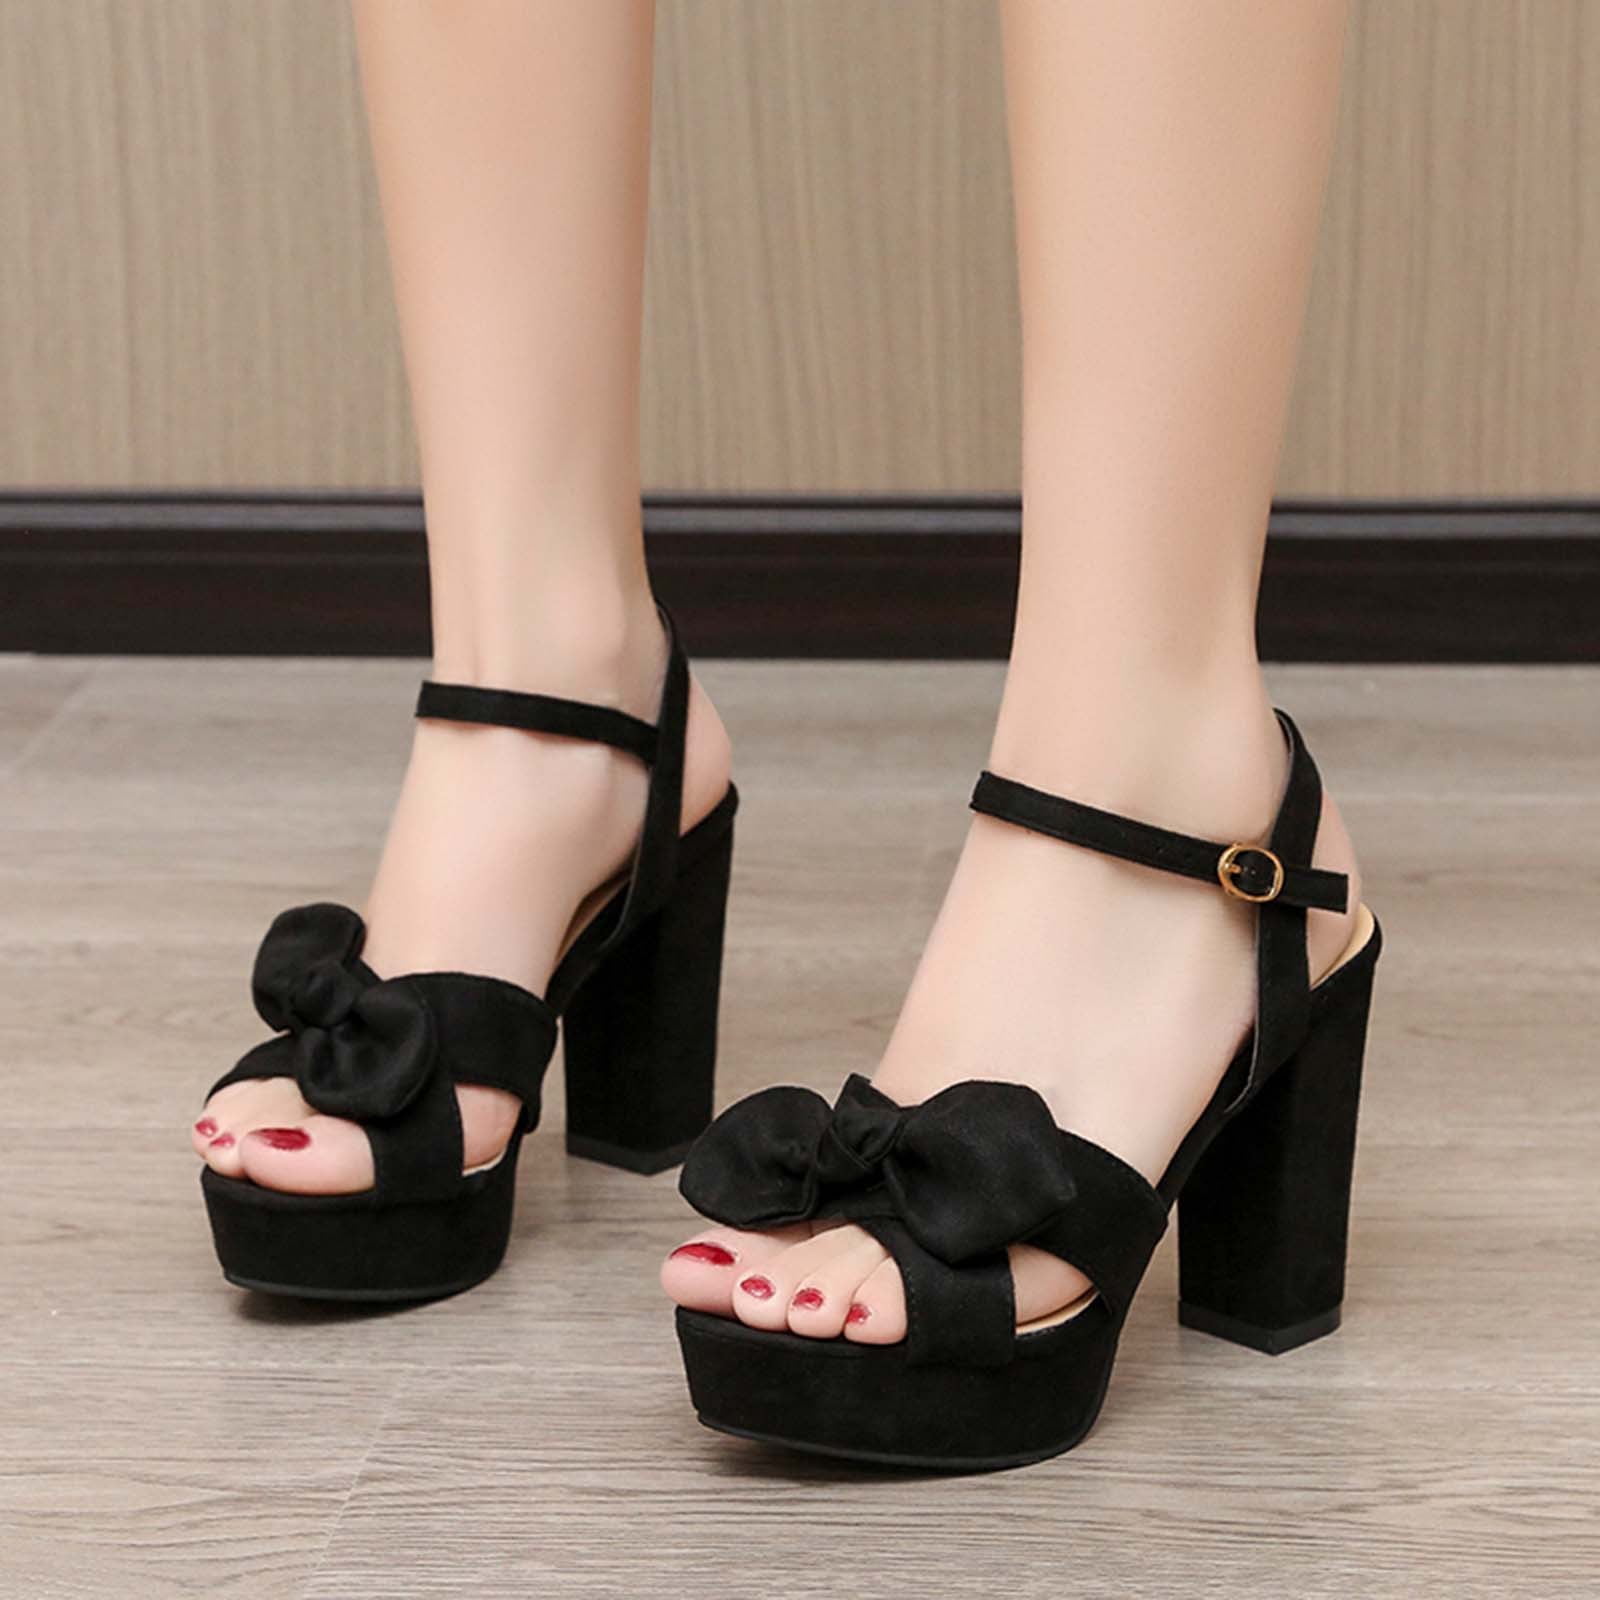 Stylestry Stylish Solid Black Block Heels For Women & Girls-hkpdtq2012.edu.vn